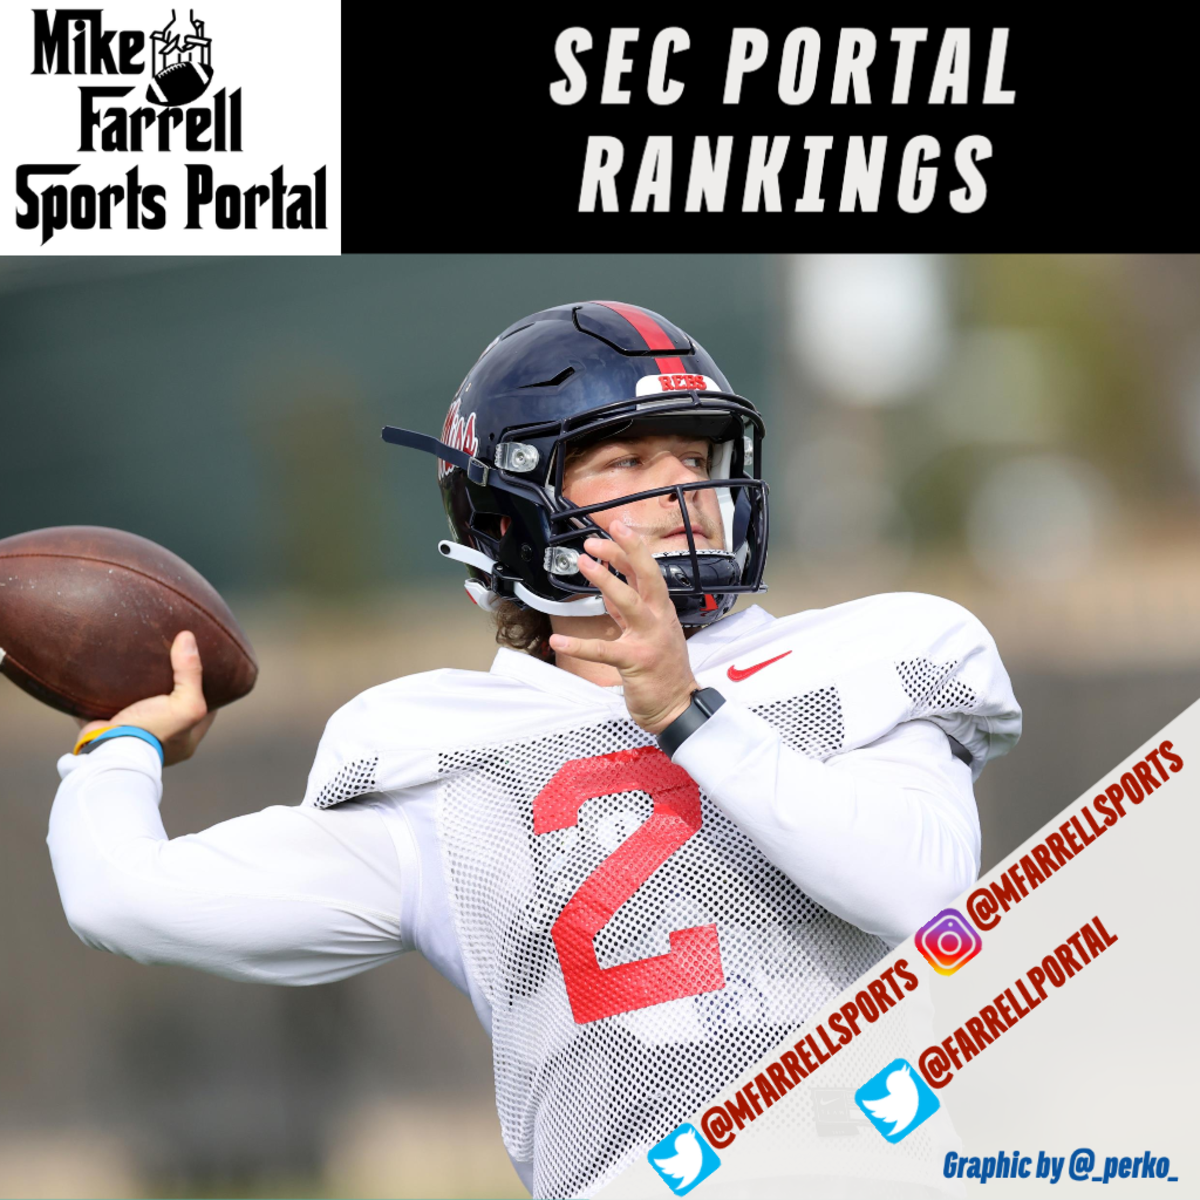 SEC Portal Rankings